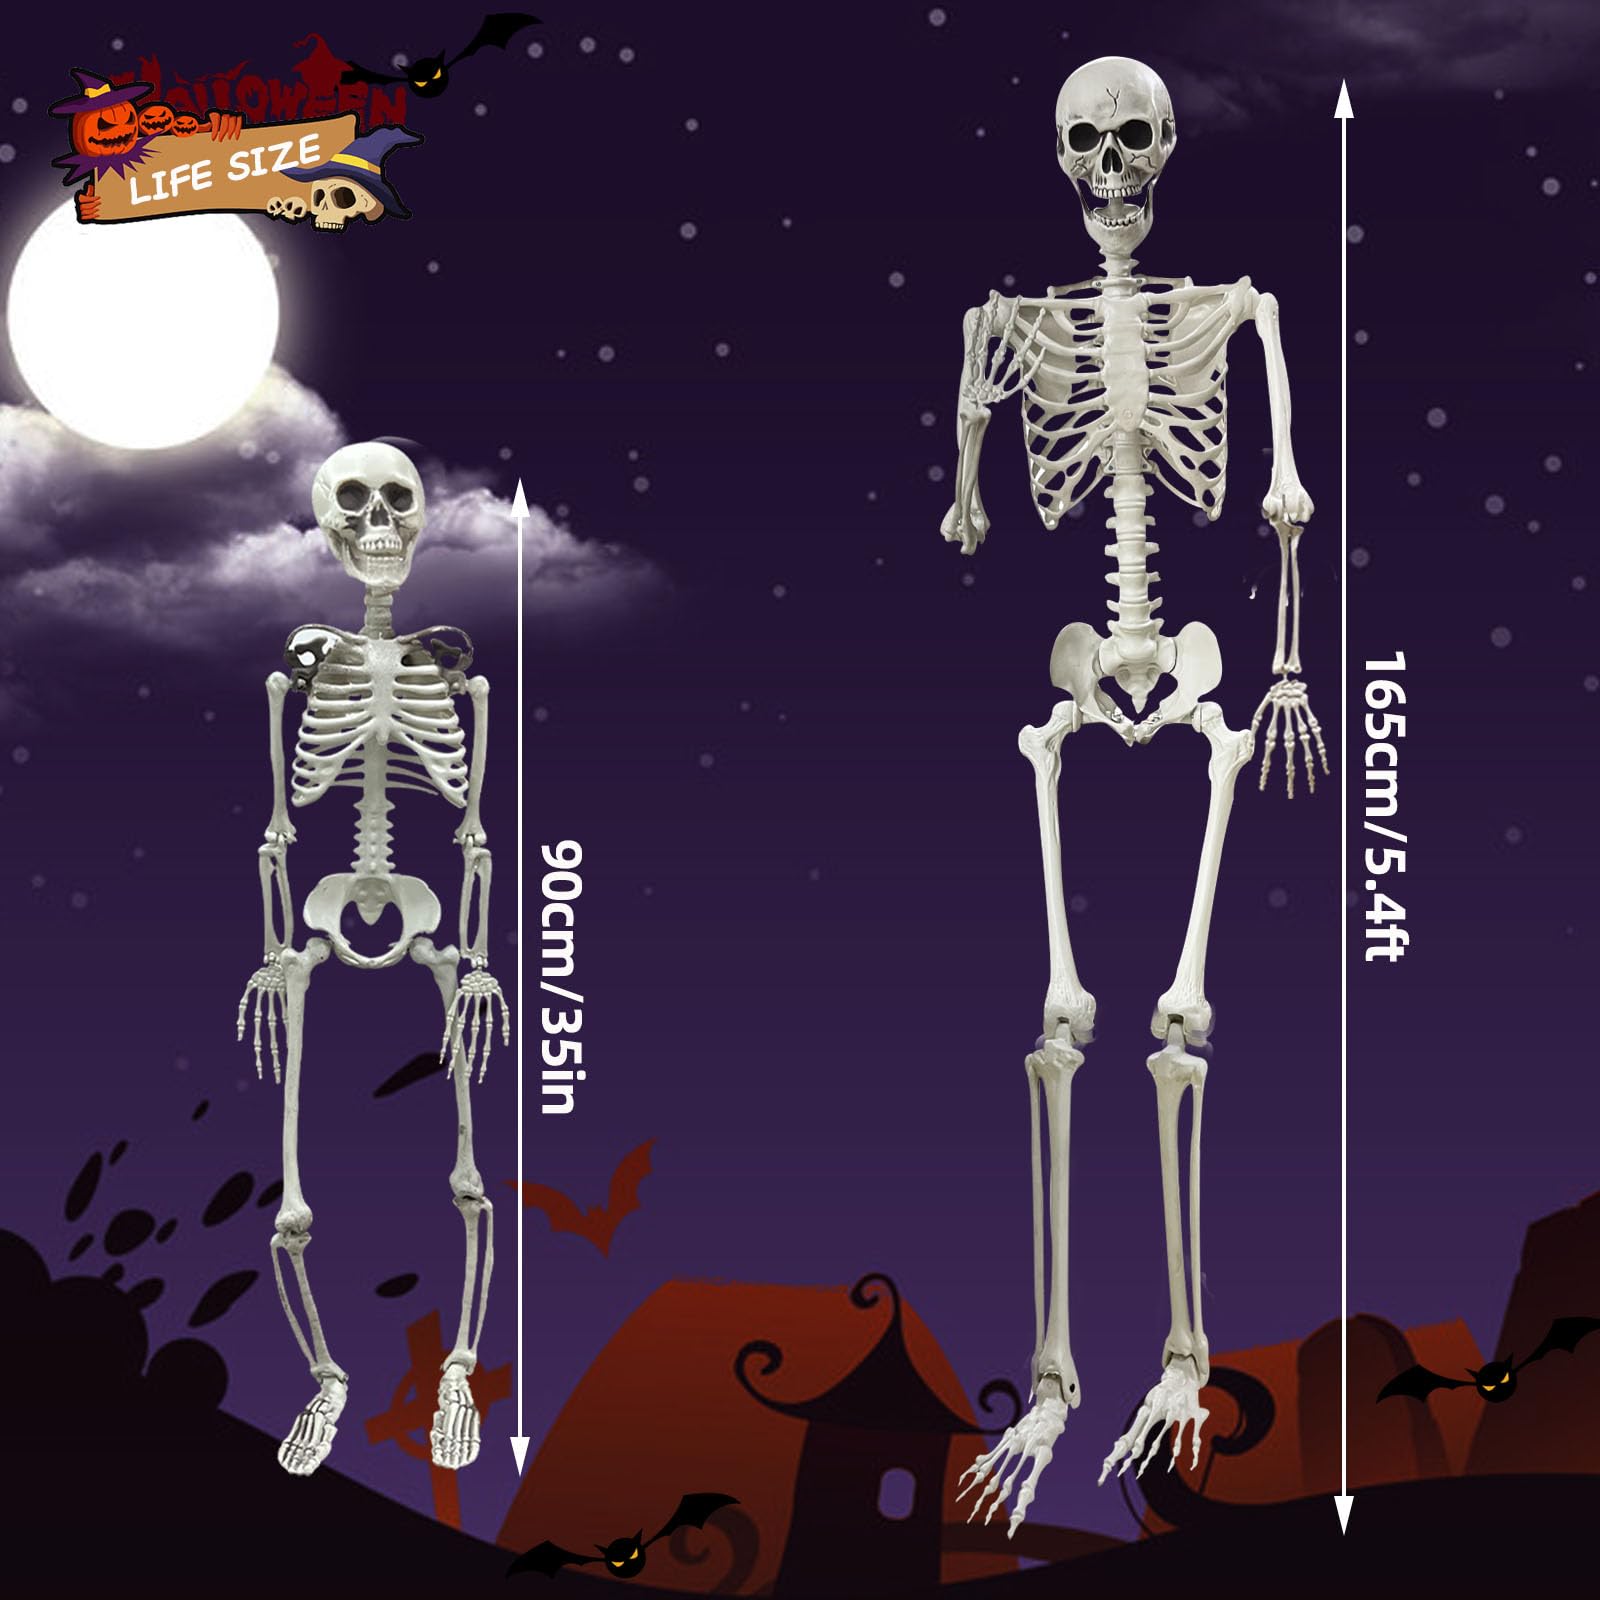 Lodou Halloween Poseable Skeleton,Adult Skeletons & Child Skeletons,Plastic Human Bones with Movable Joints for Halloween Graveyard Decorations (5.4ft & 3ft)